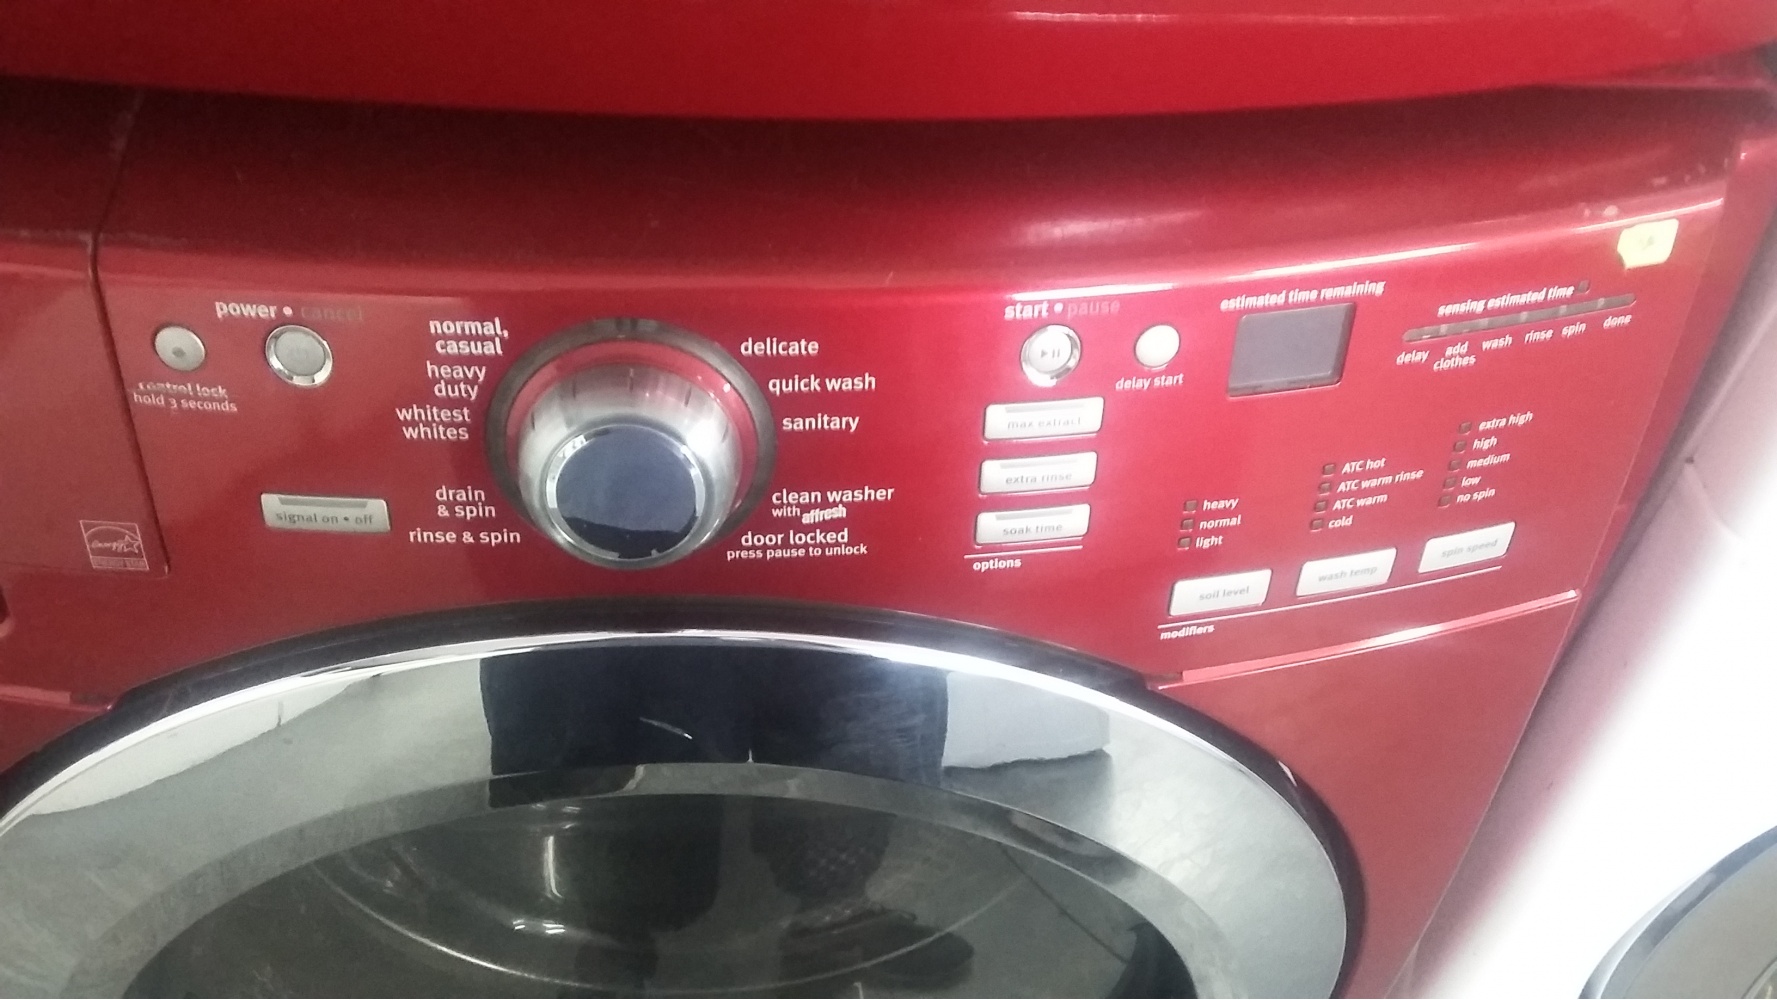 maytag 3000 dryer washer load nuys van gas cabrito road kimosappliances